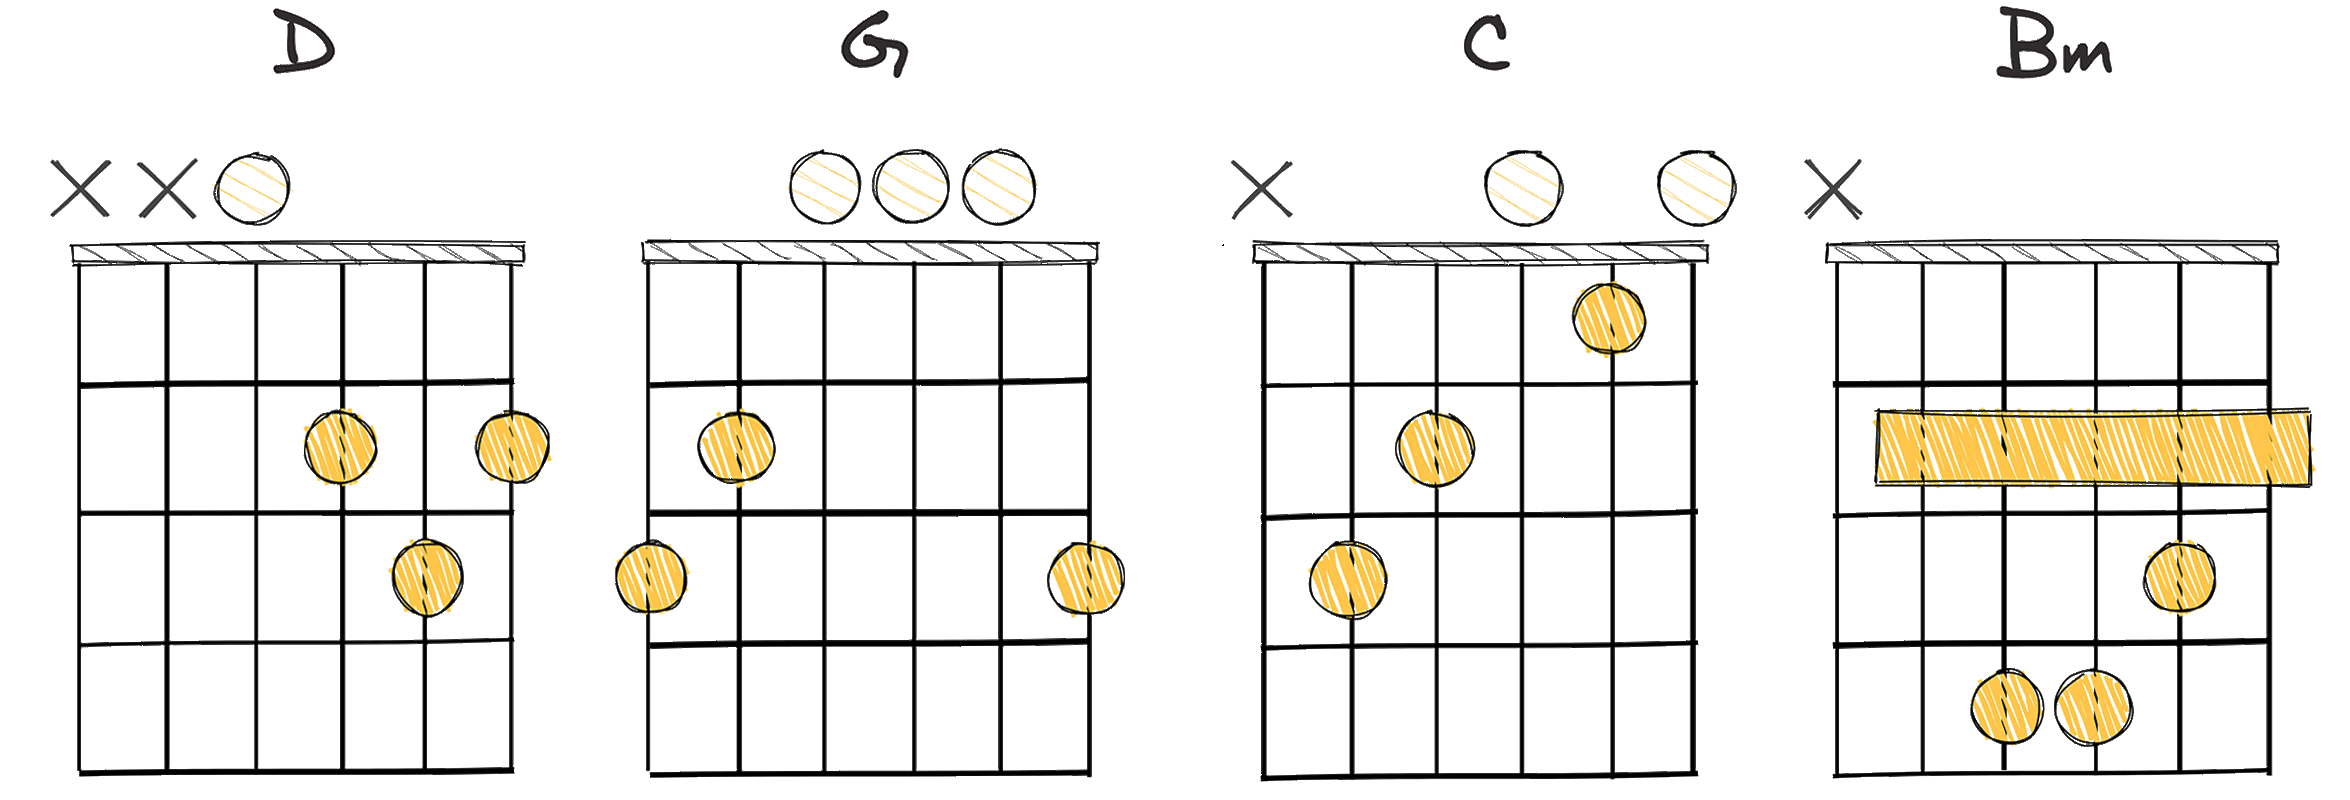 V - I - IV - iii (5 - 1 - 4 - 3) chords diagram